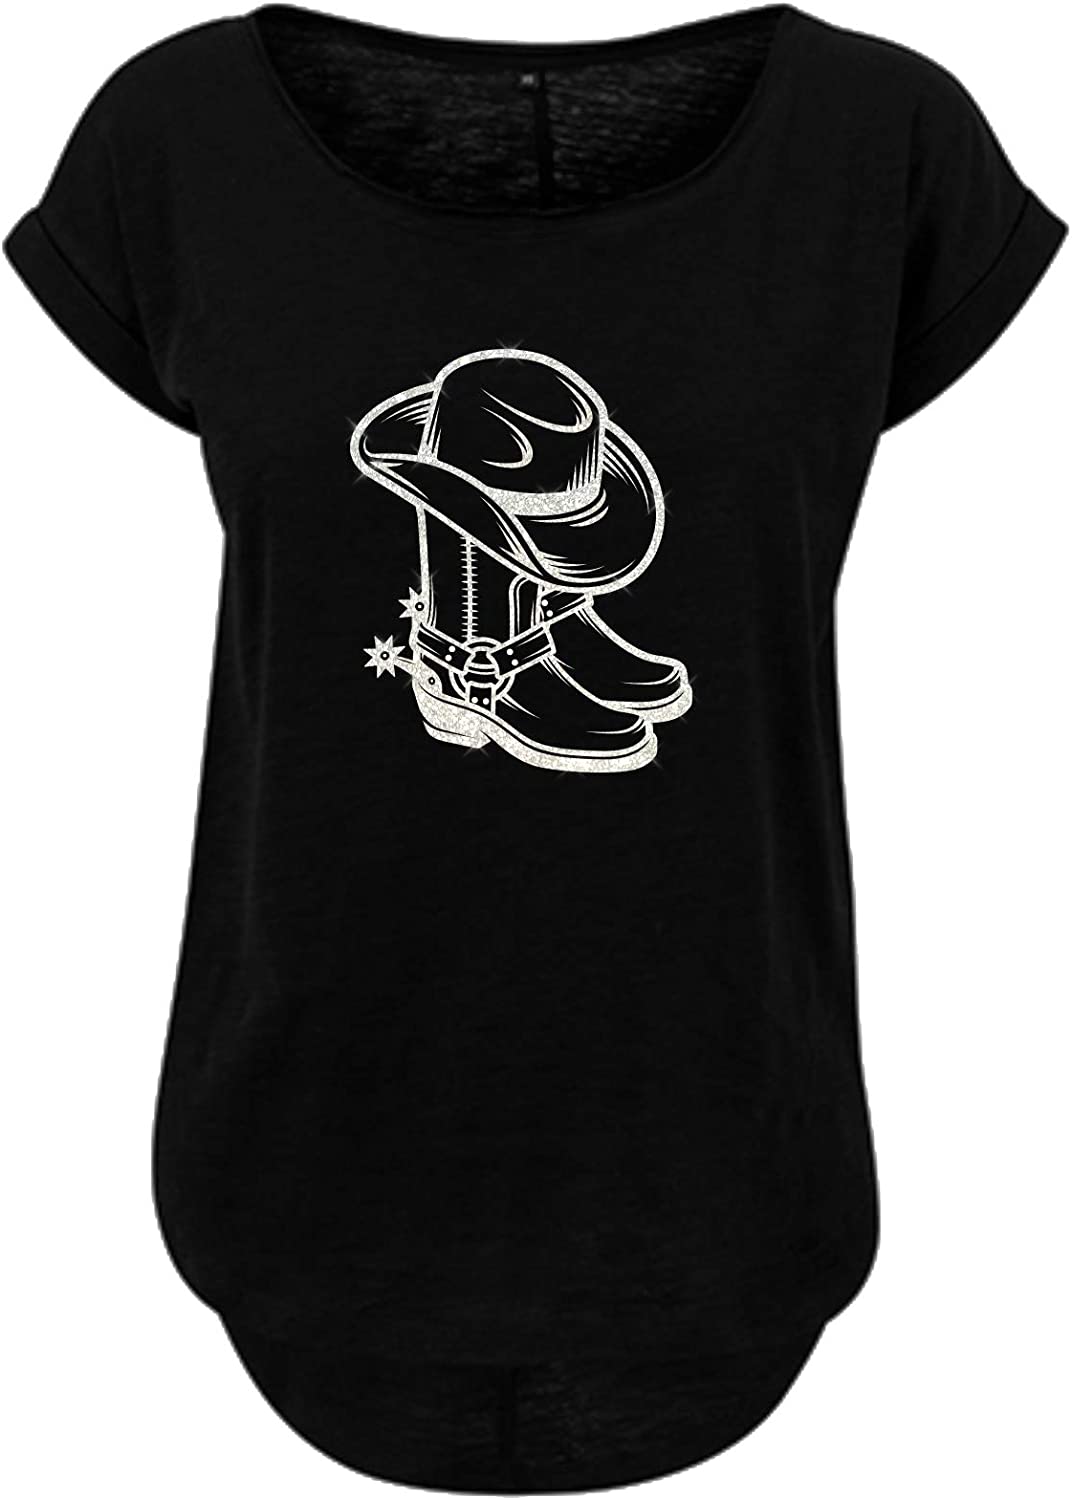 Blingeling®Line Dance Damen T-Shirt mit Cowboystiefel Motiv